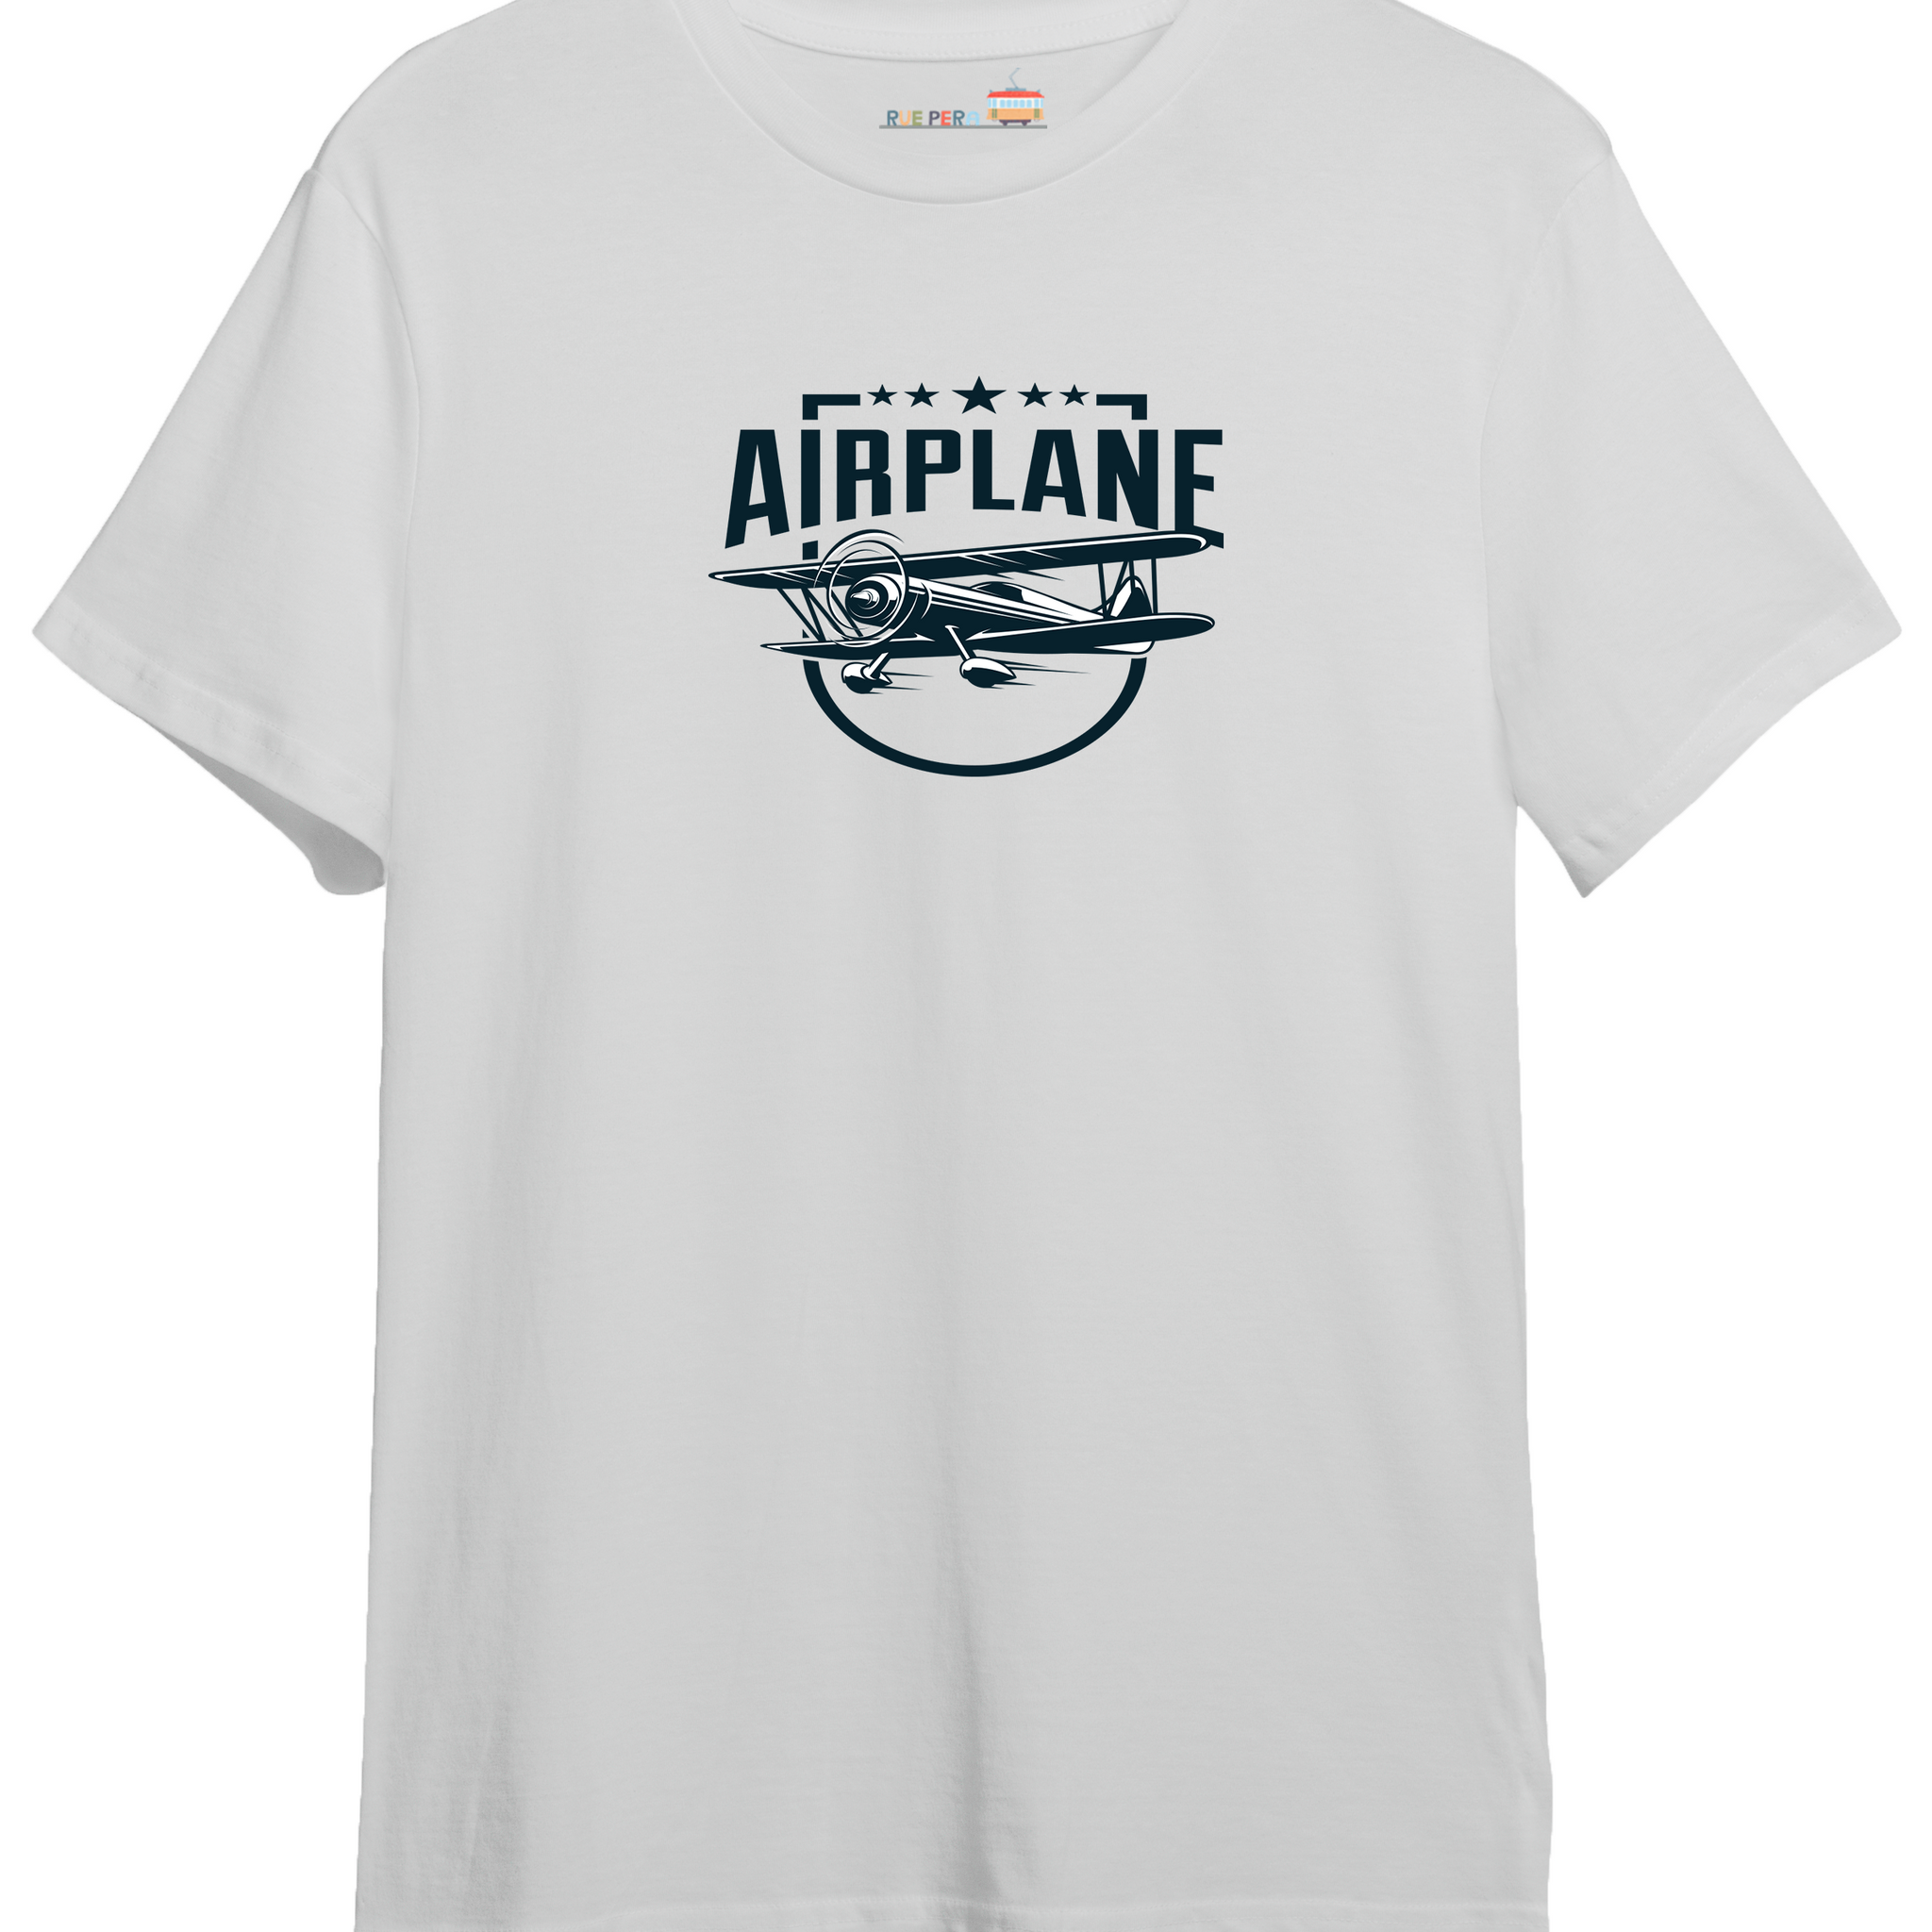 Airplane - Oversize Tshirt